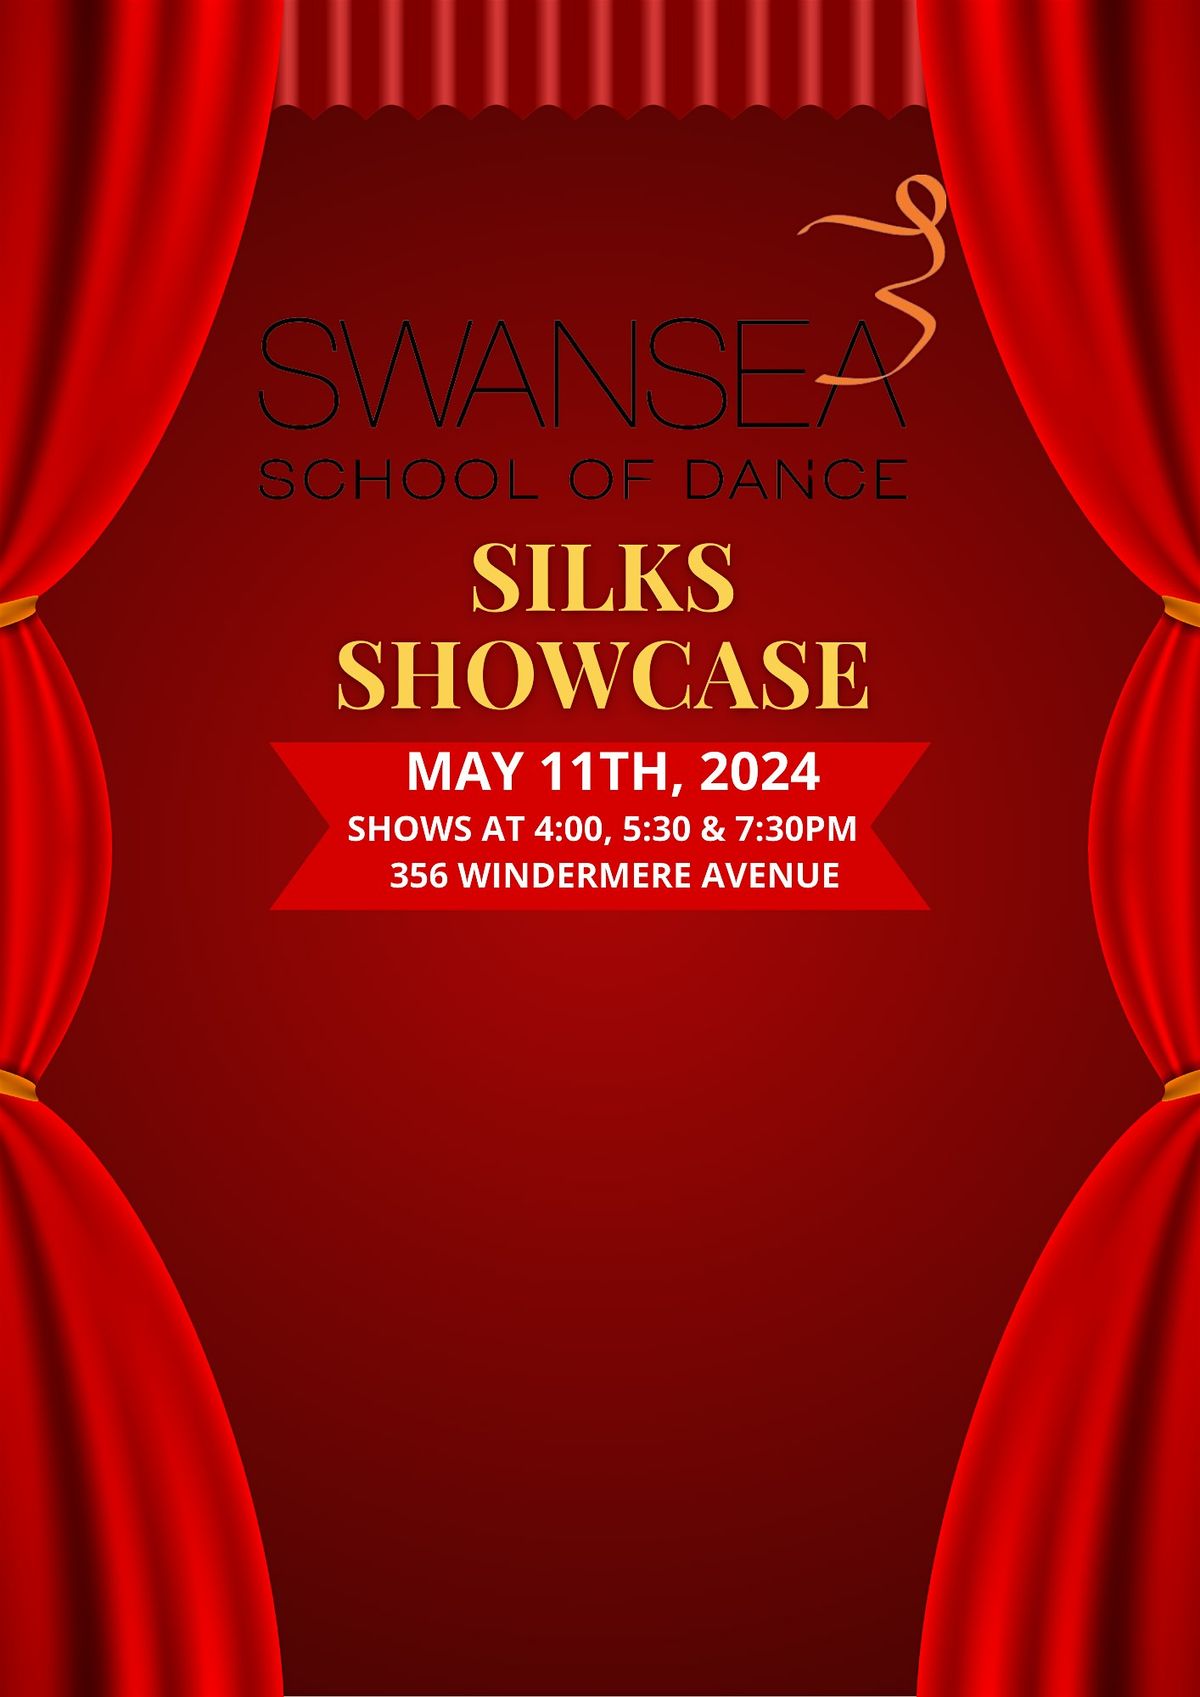 SSOD's Silks Showcase #2